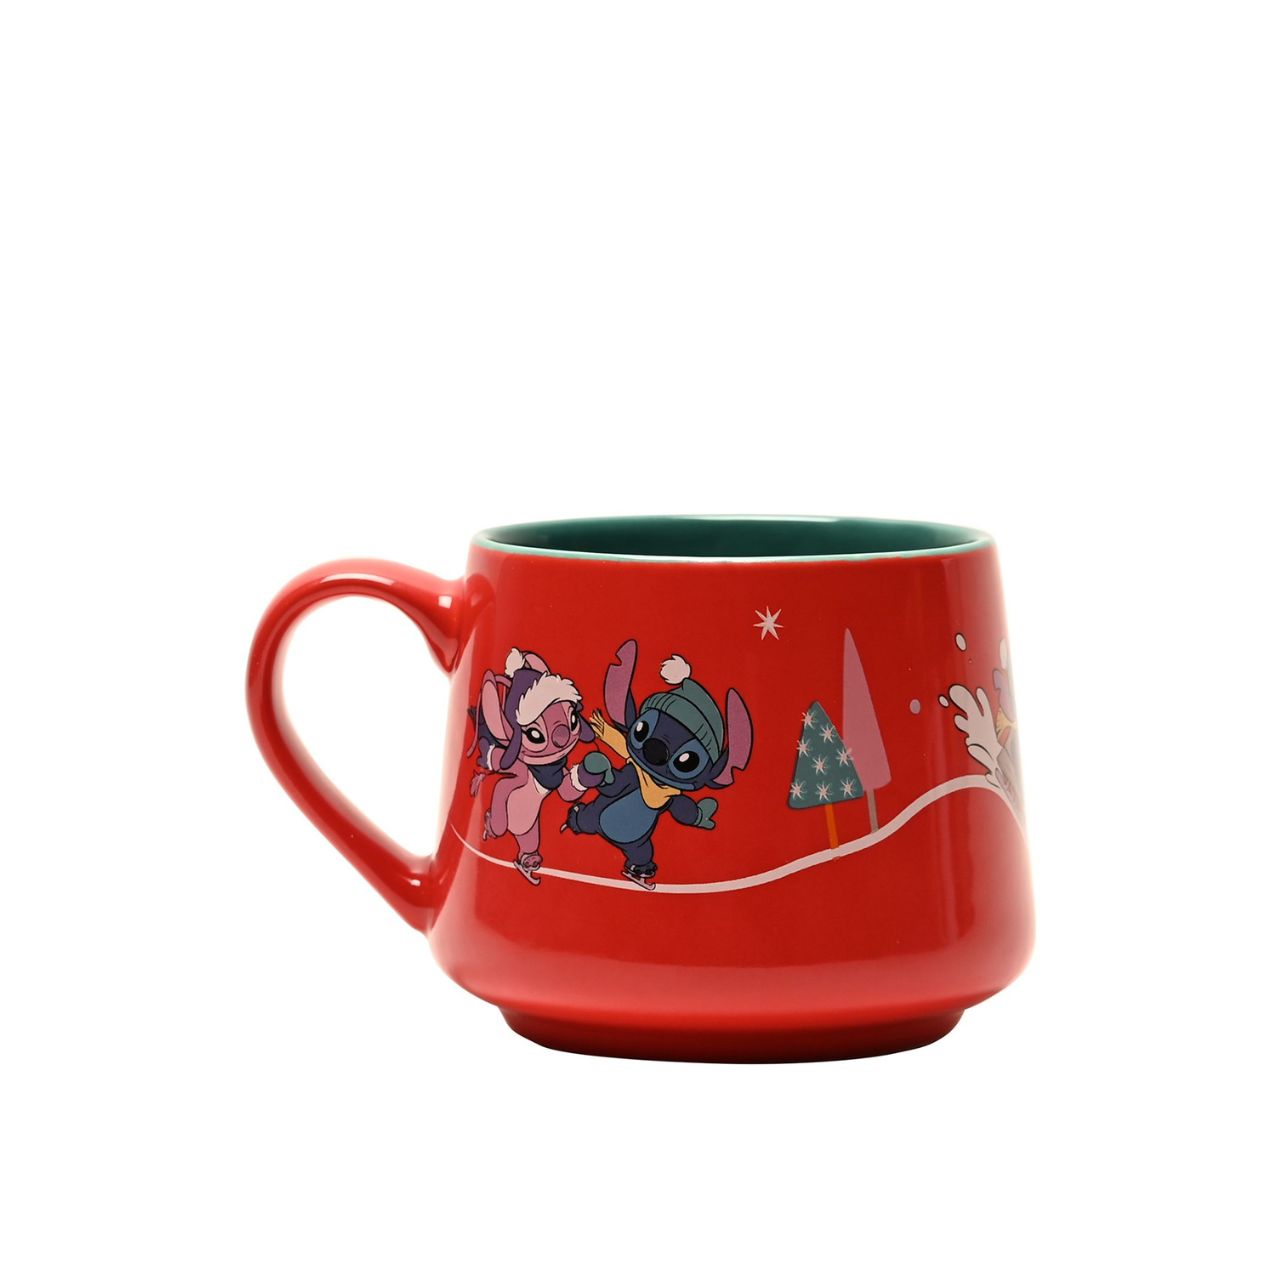 Disney Stitch Christmas Mug "Merry Everything"  A Merry Everything Stitch mug by DISNEY.  This colourful festive mug is brimming with festive cheer for Disney fans.